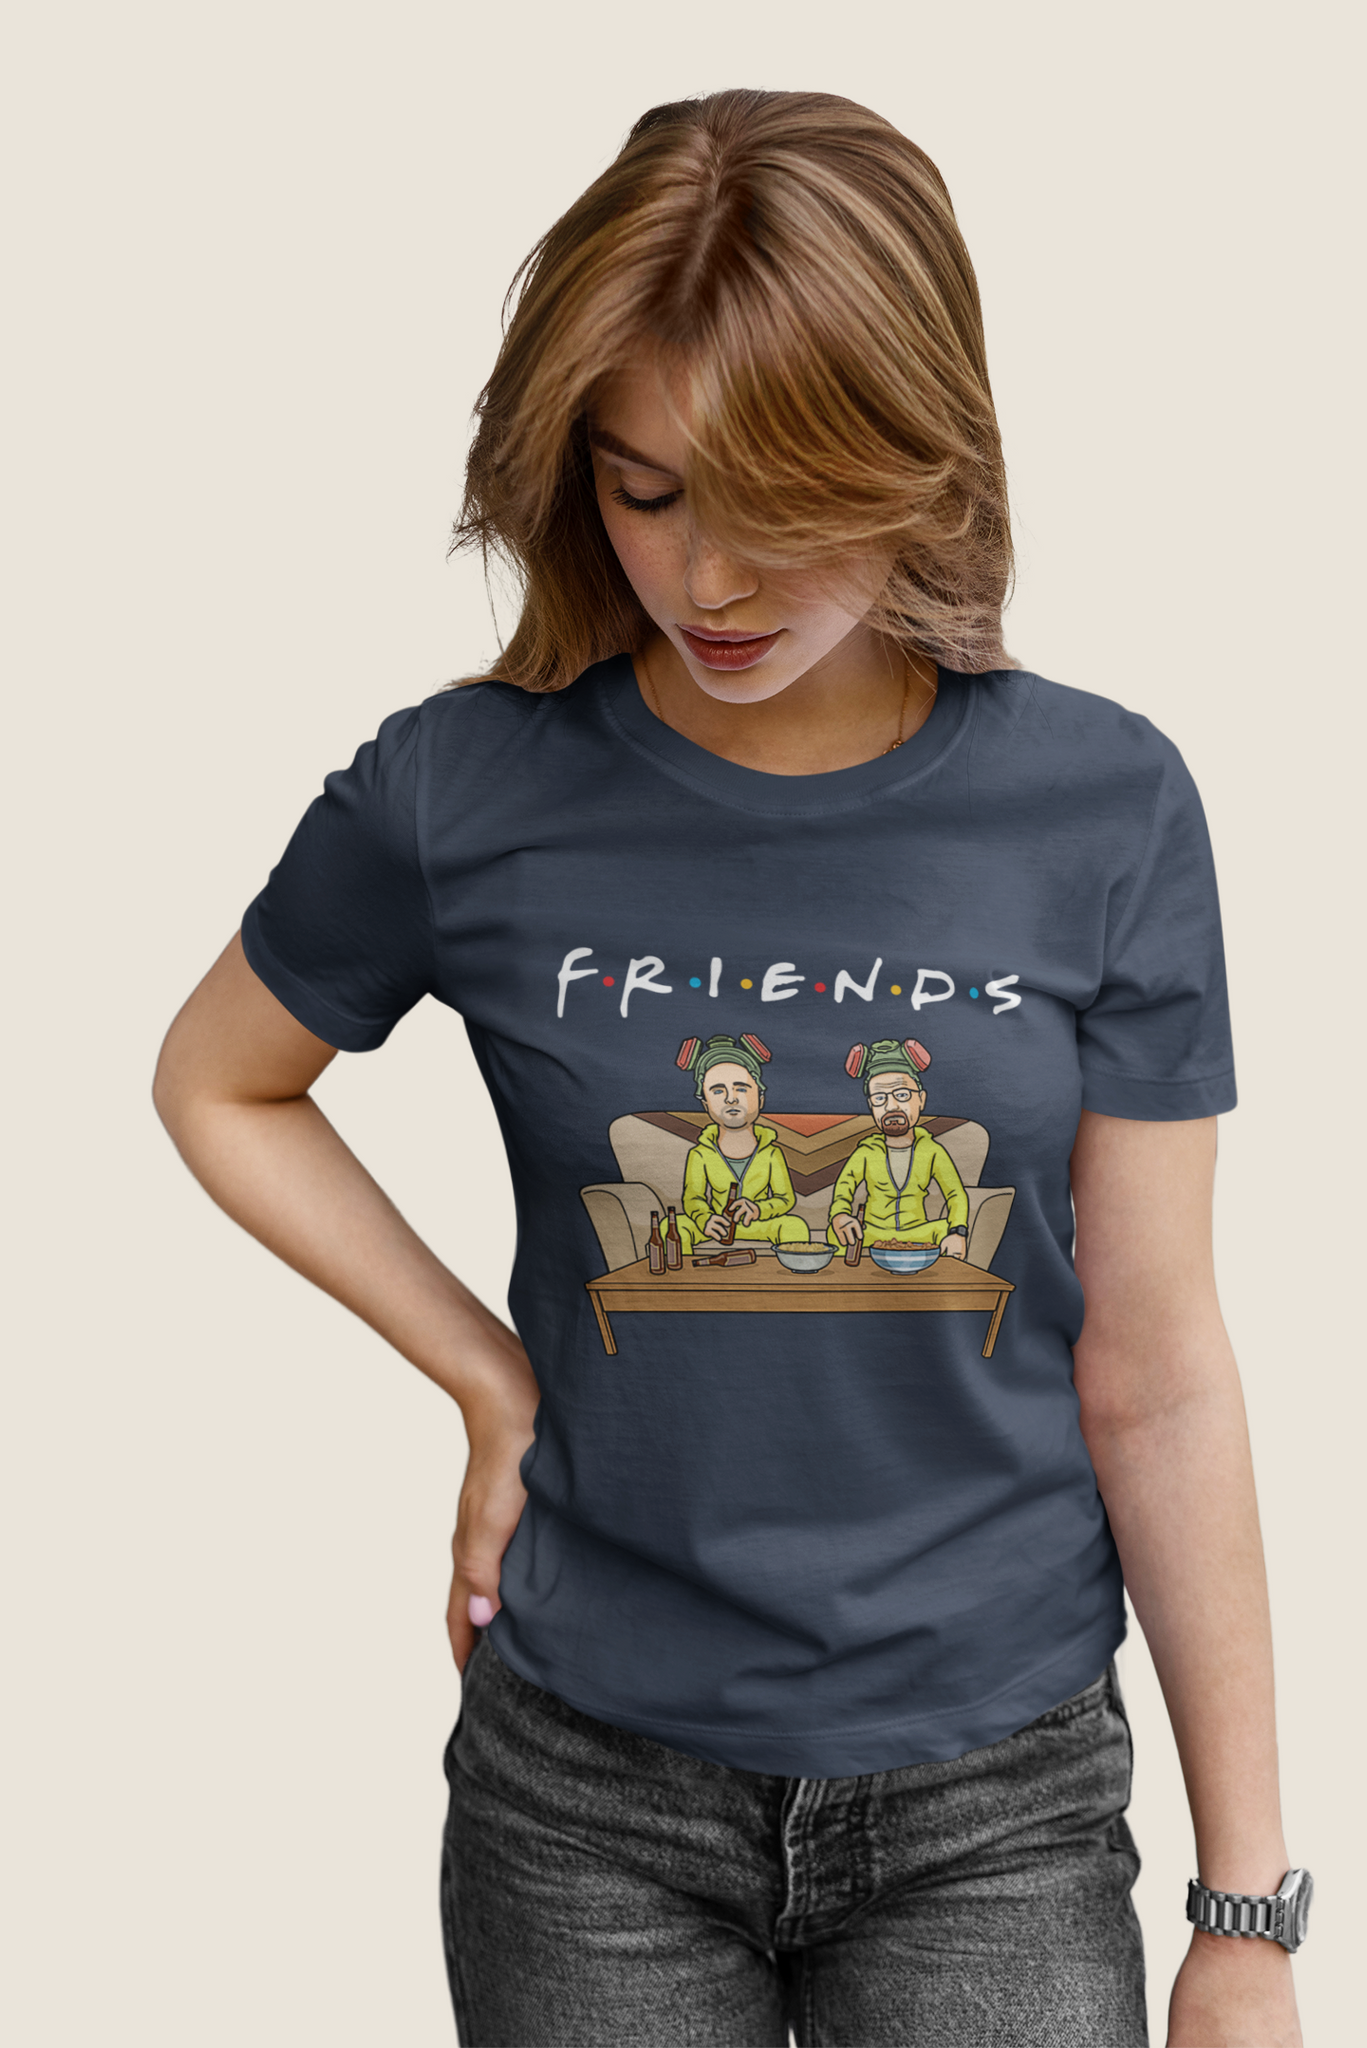 Breaking Bad T Shirt, Jesse Pinkman Walter White T Shirt, Friends Tshirt